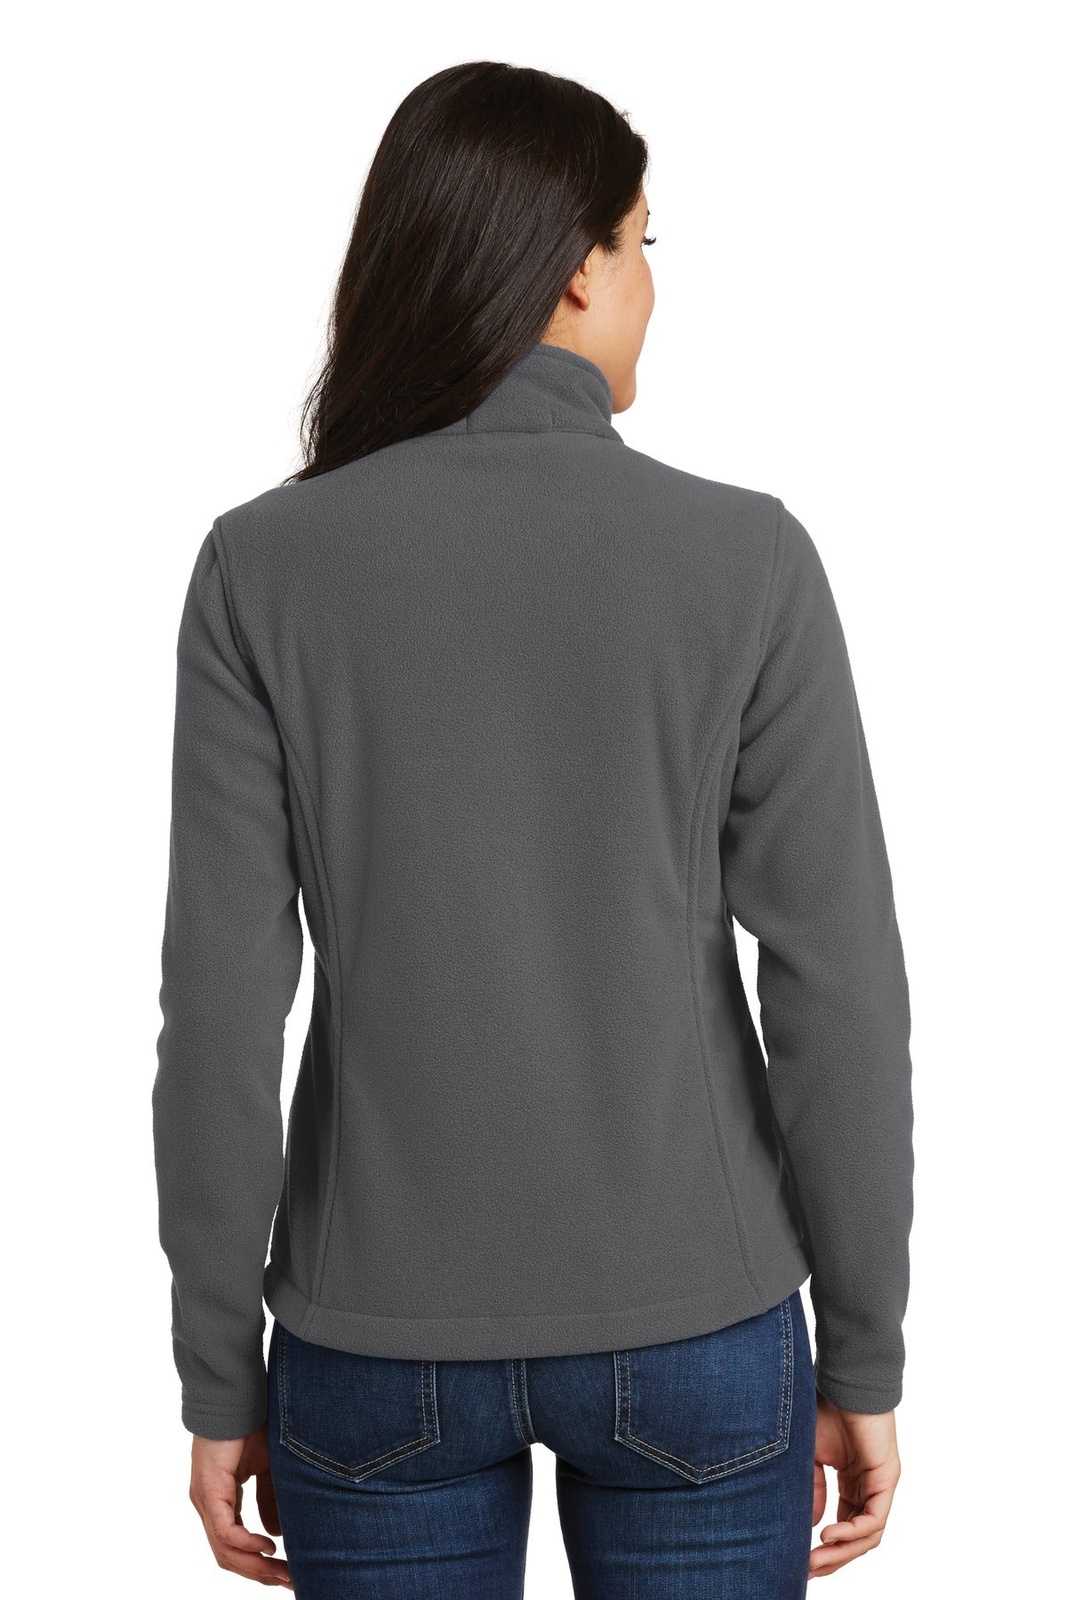 Port Authority L217 Ladies Value Fleece Jacket - Iron Gray - HIT a Double - 2